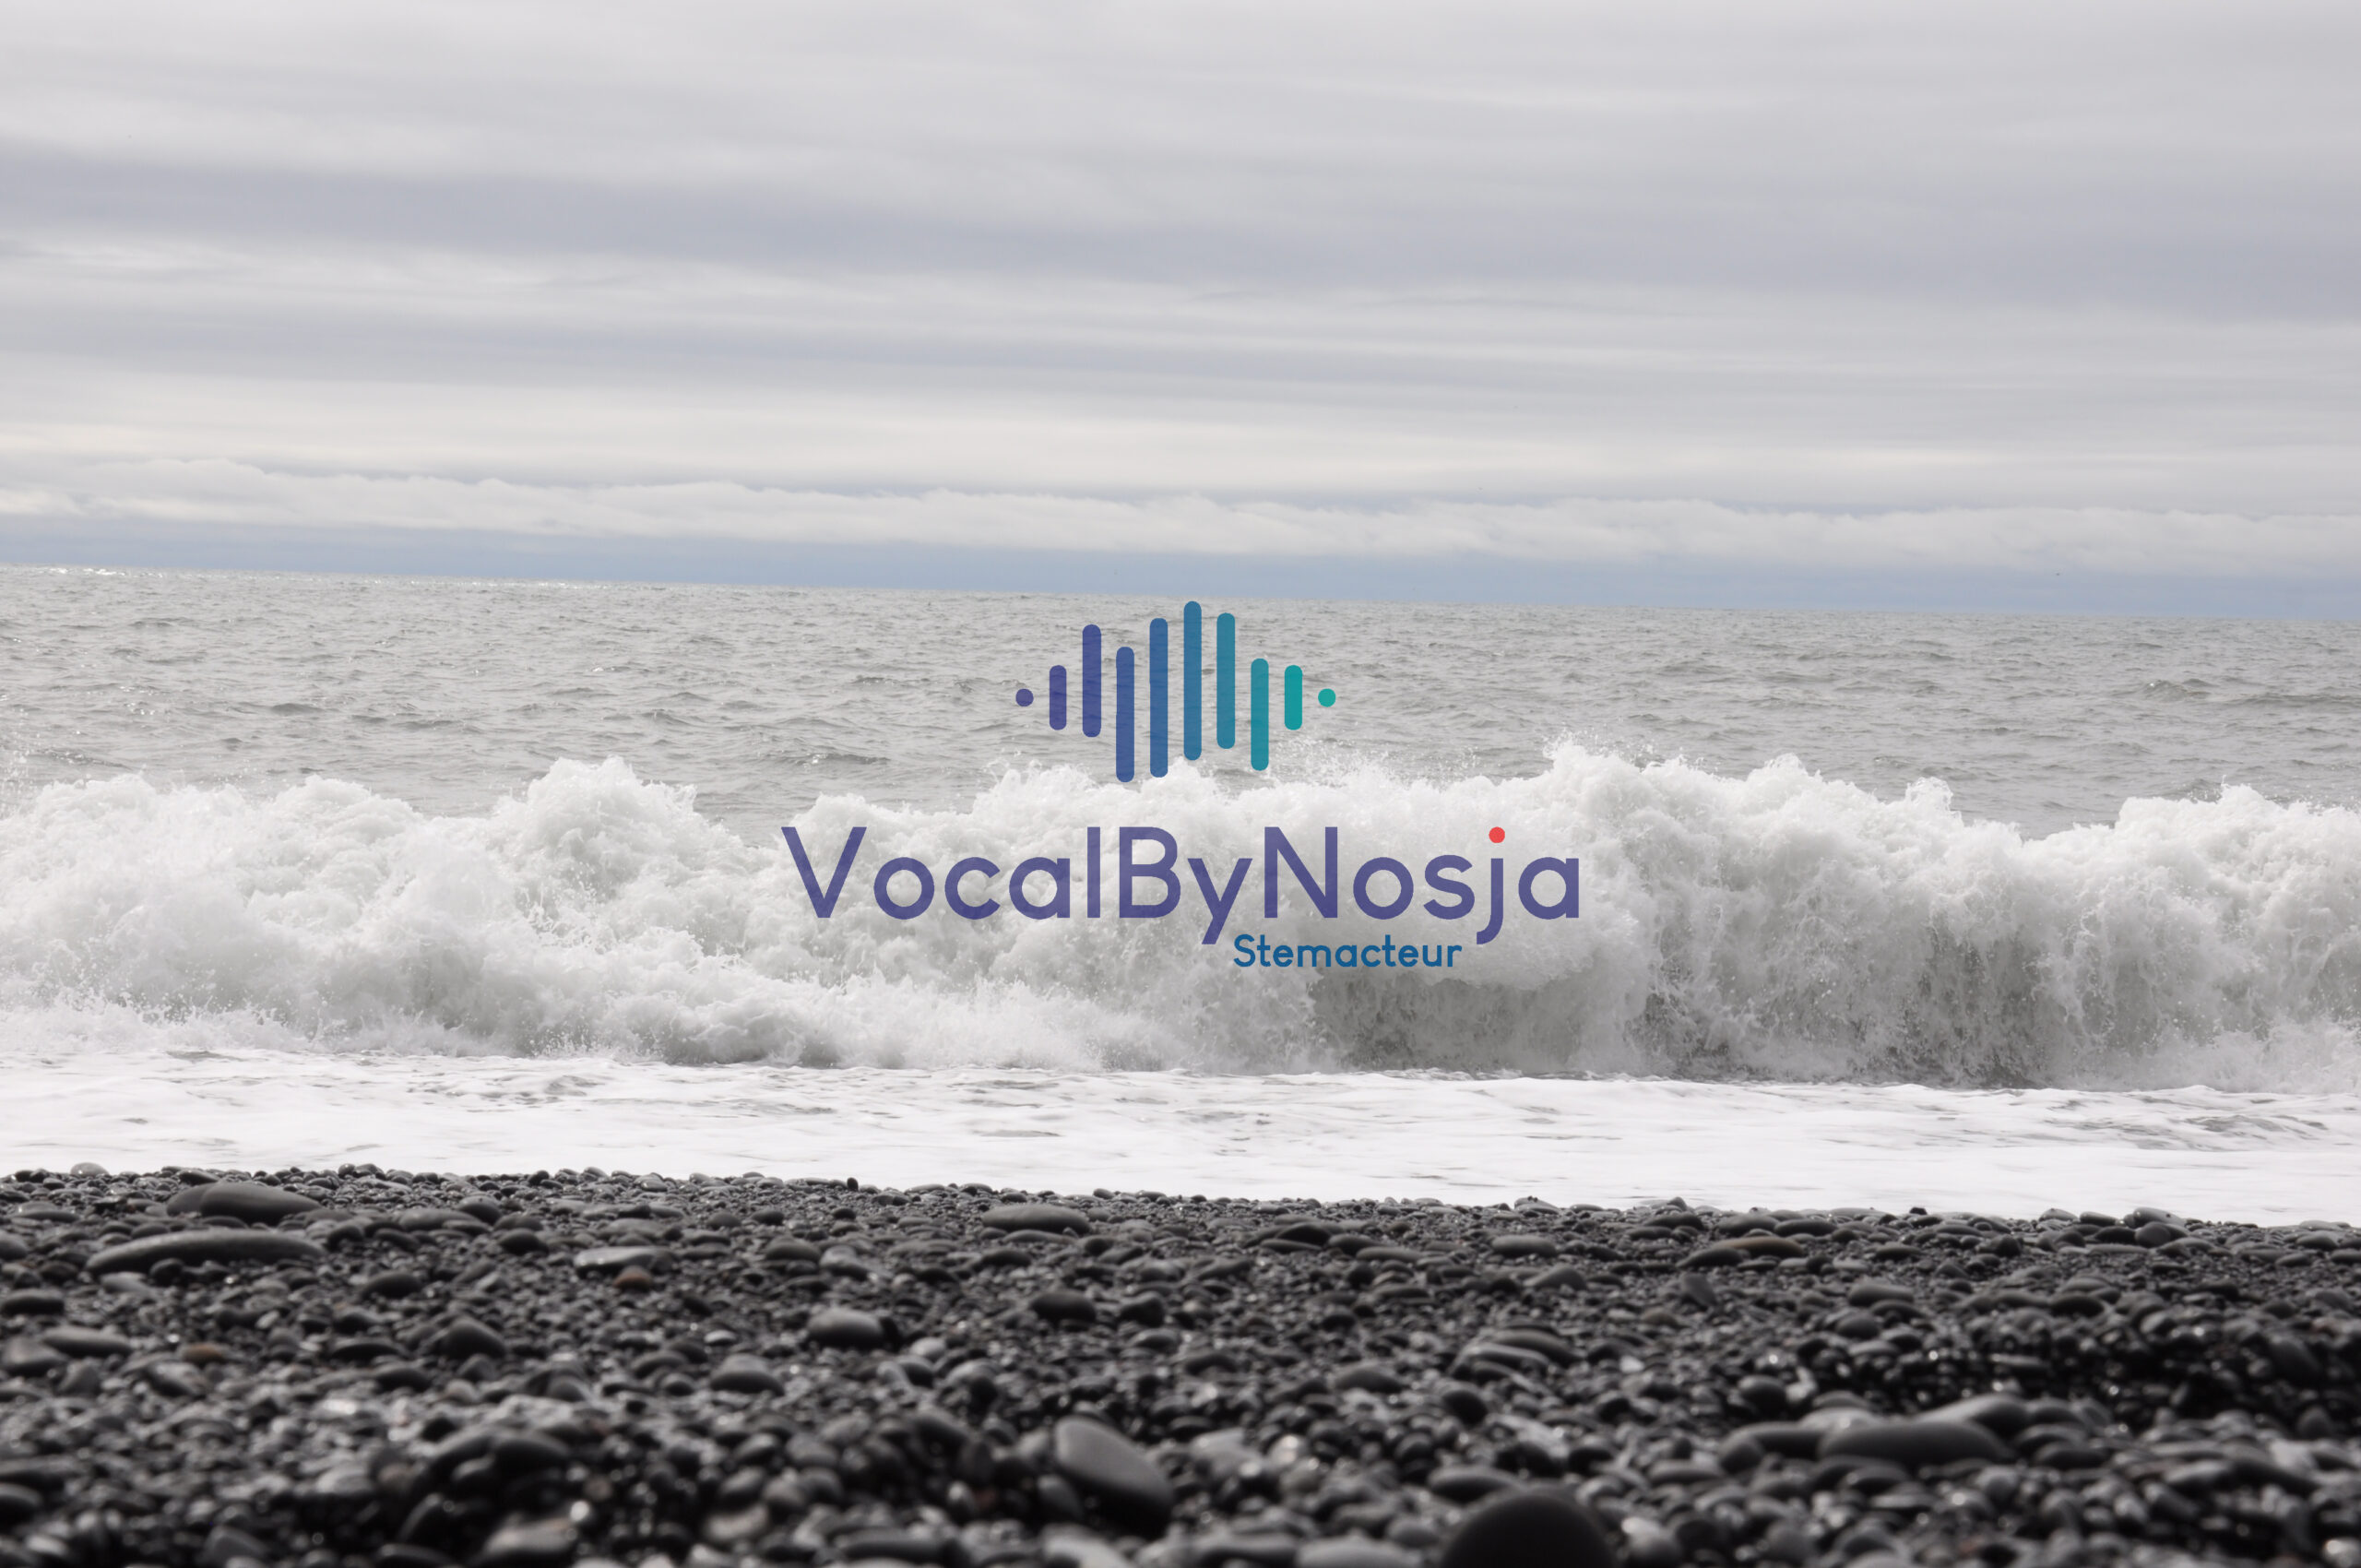 VocalByNosja at sea